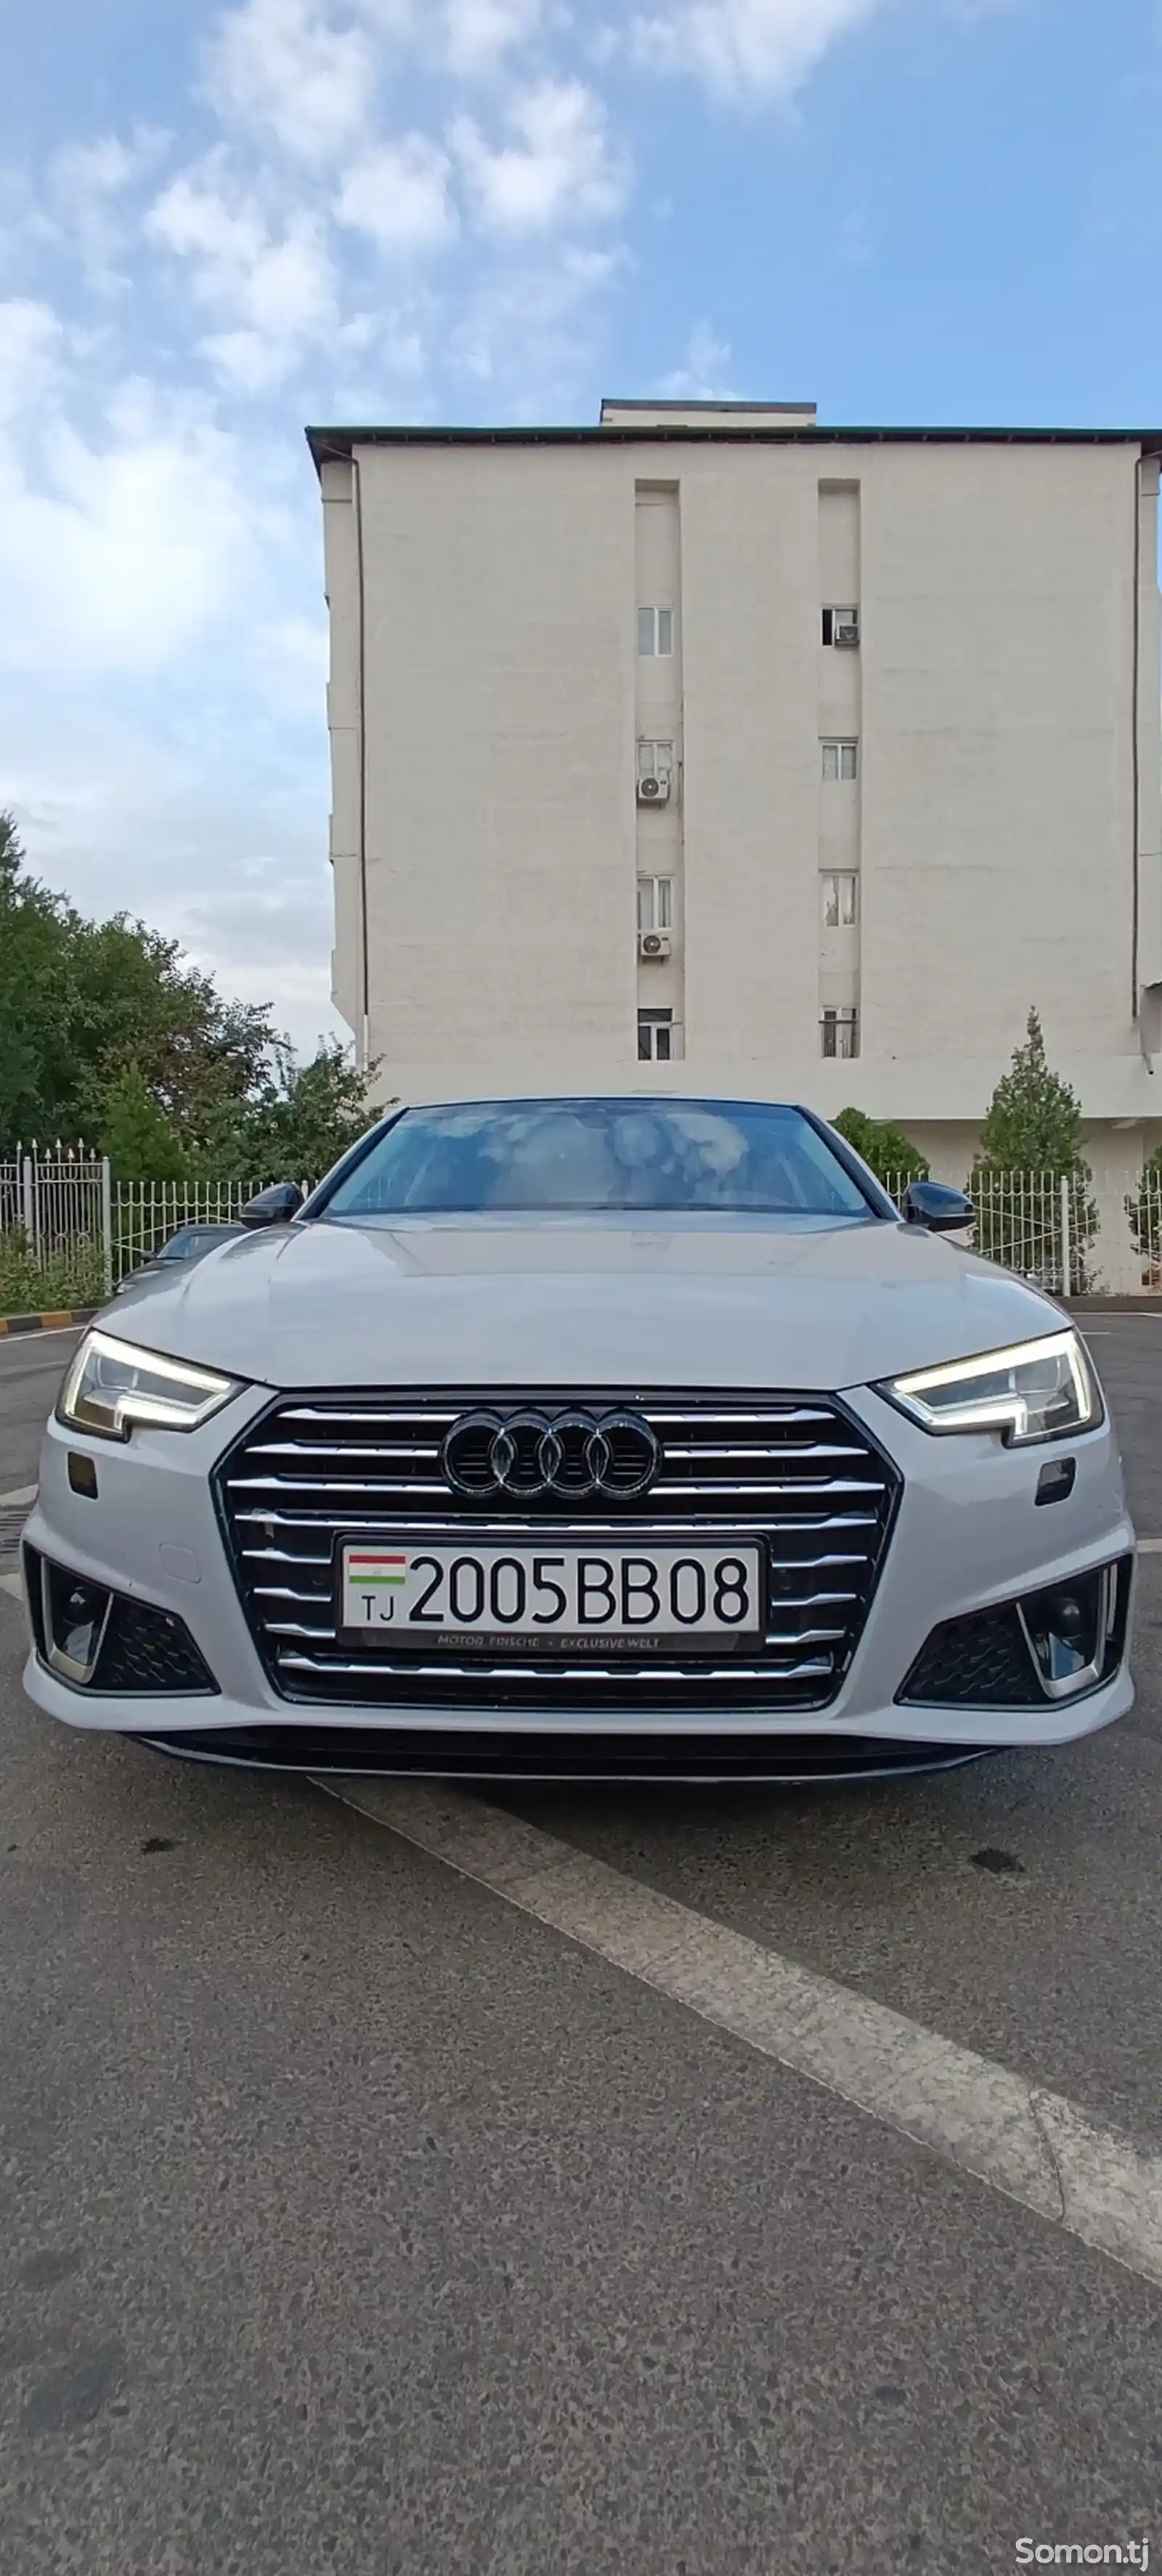 Audi A4, 2019-2